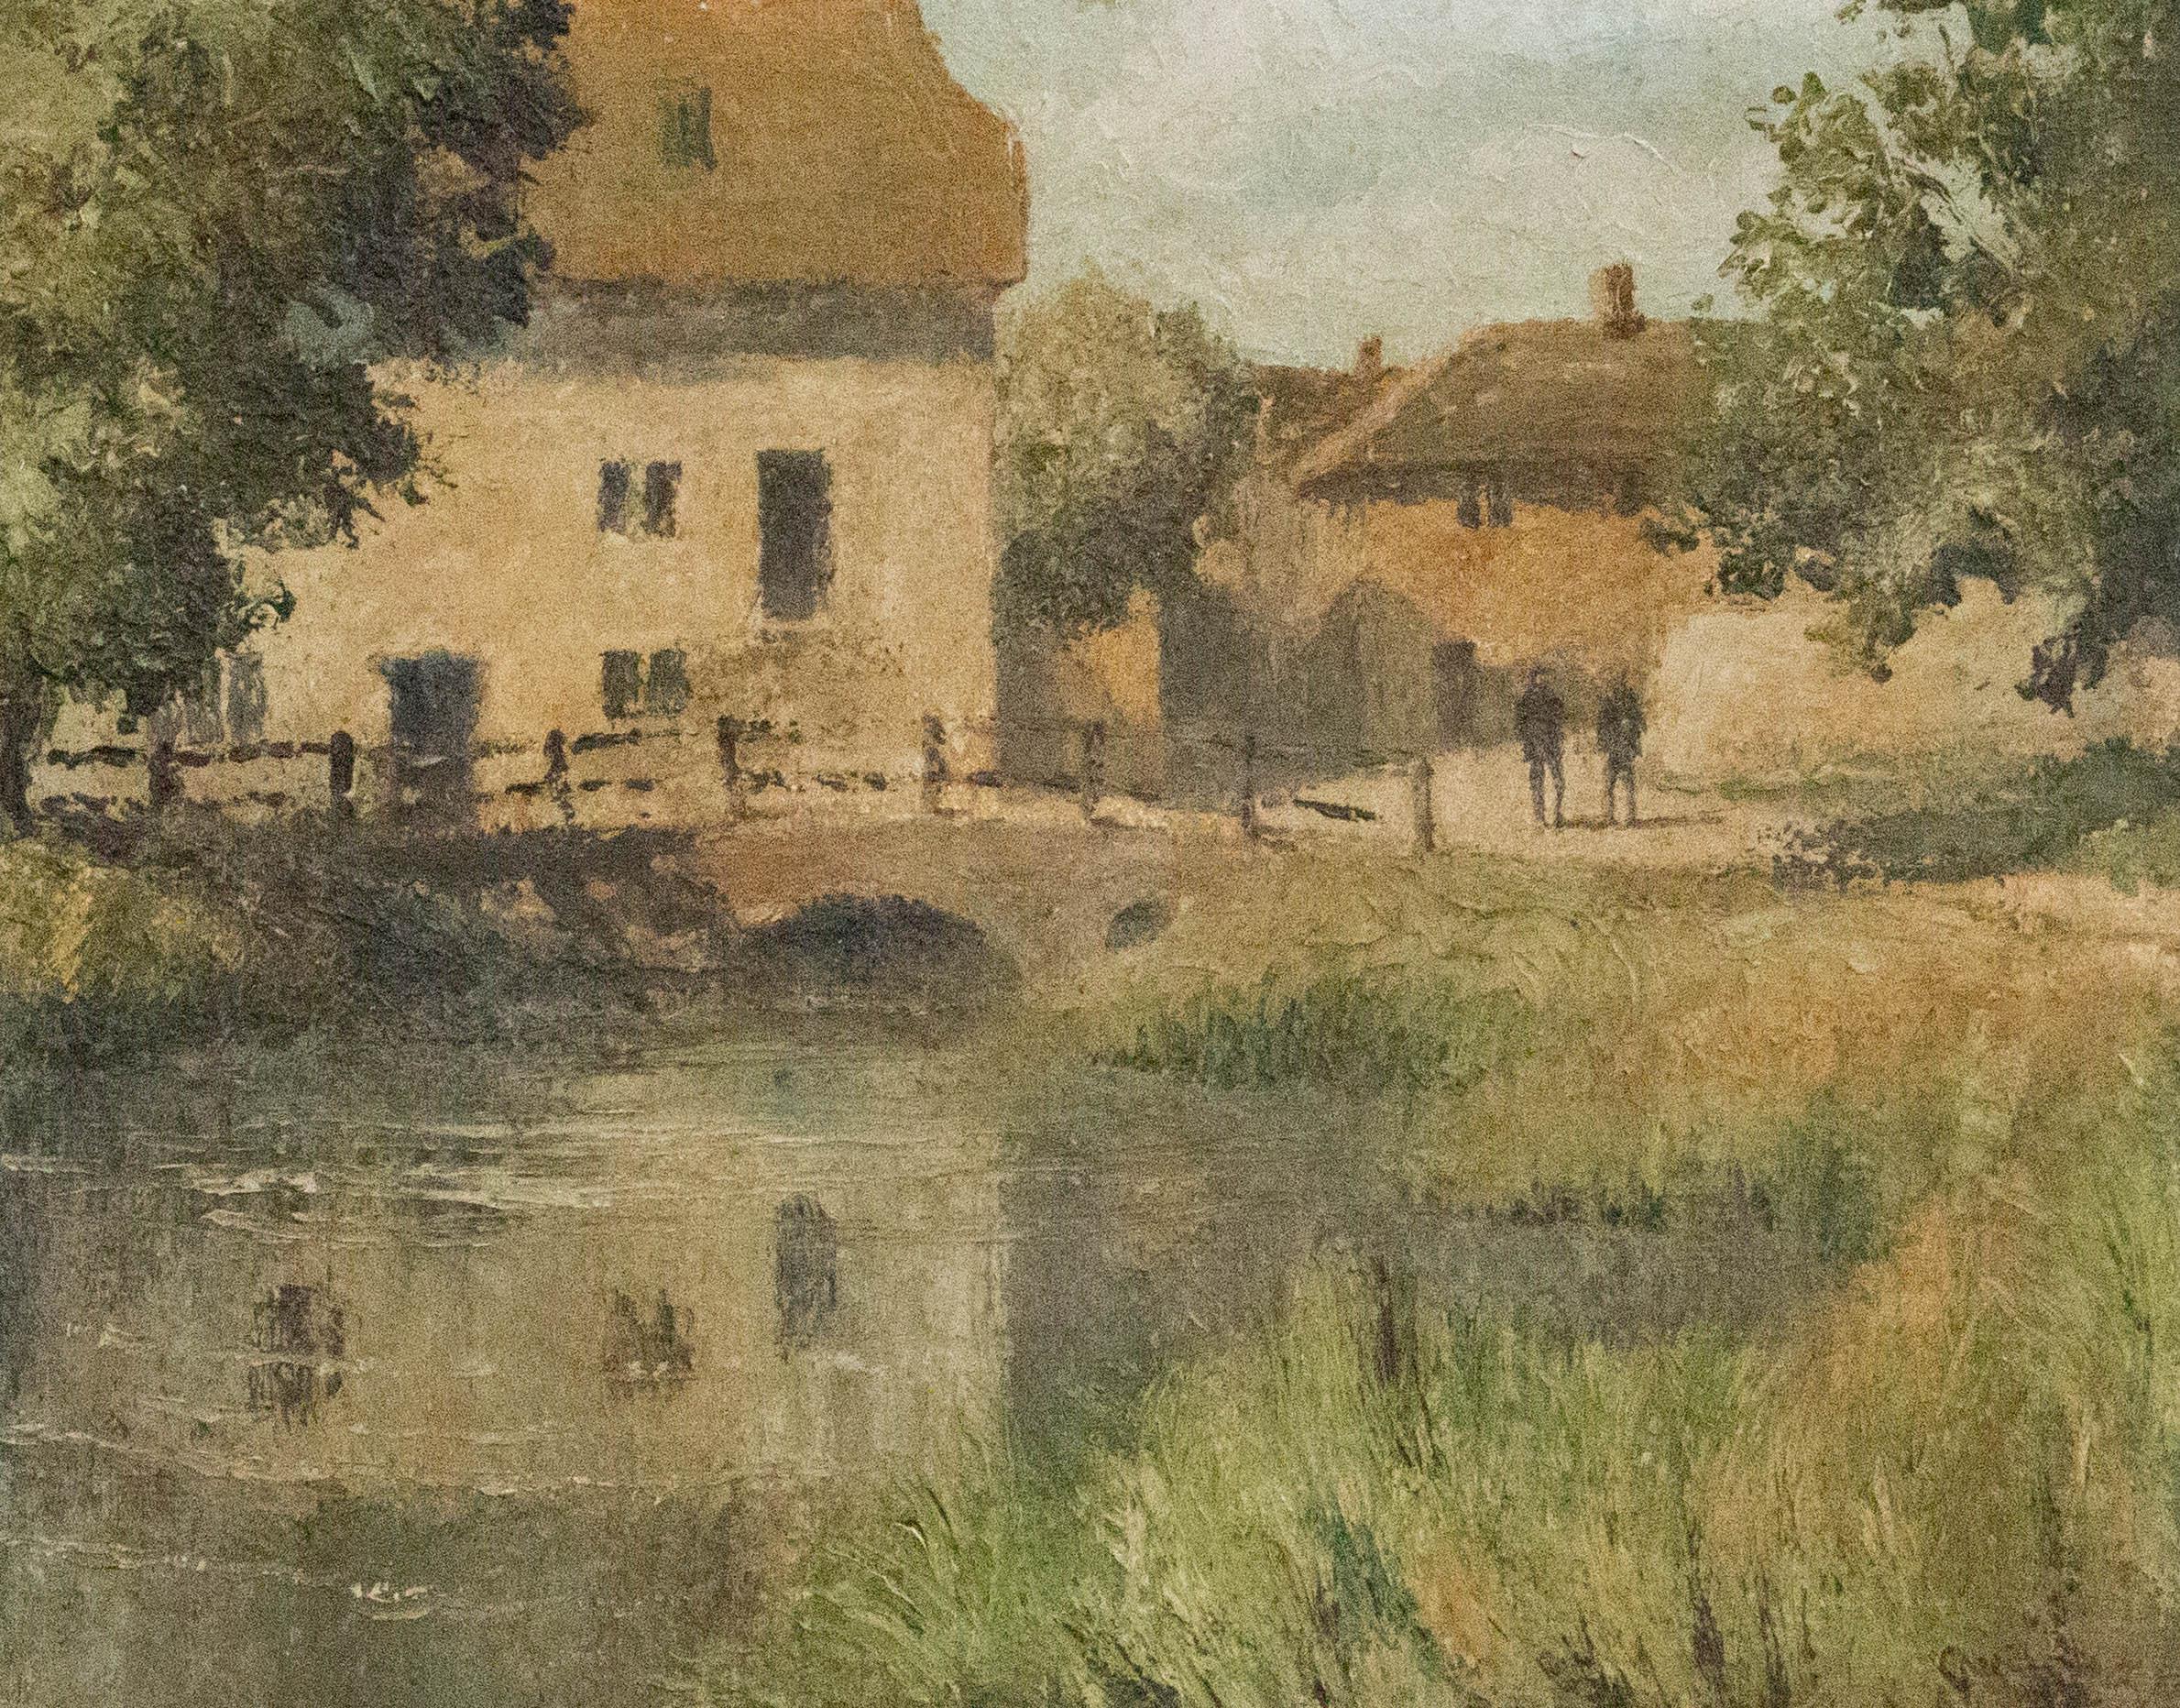 Unknown Landscape Painting - 20th Century Oil - Impressionistic River Landscape